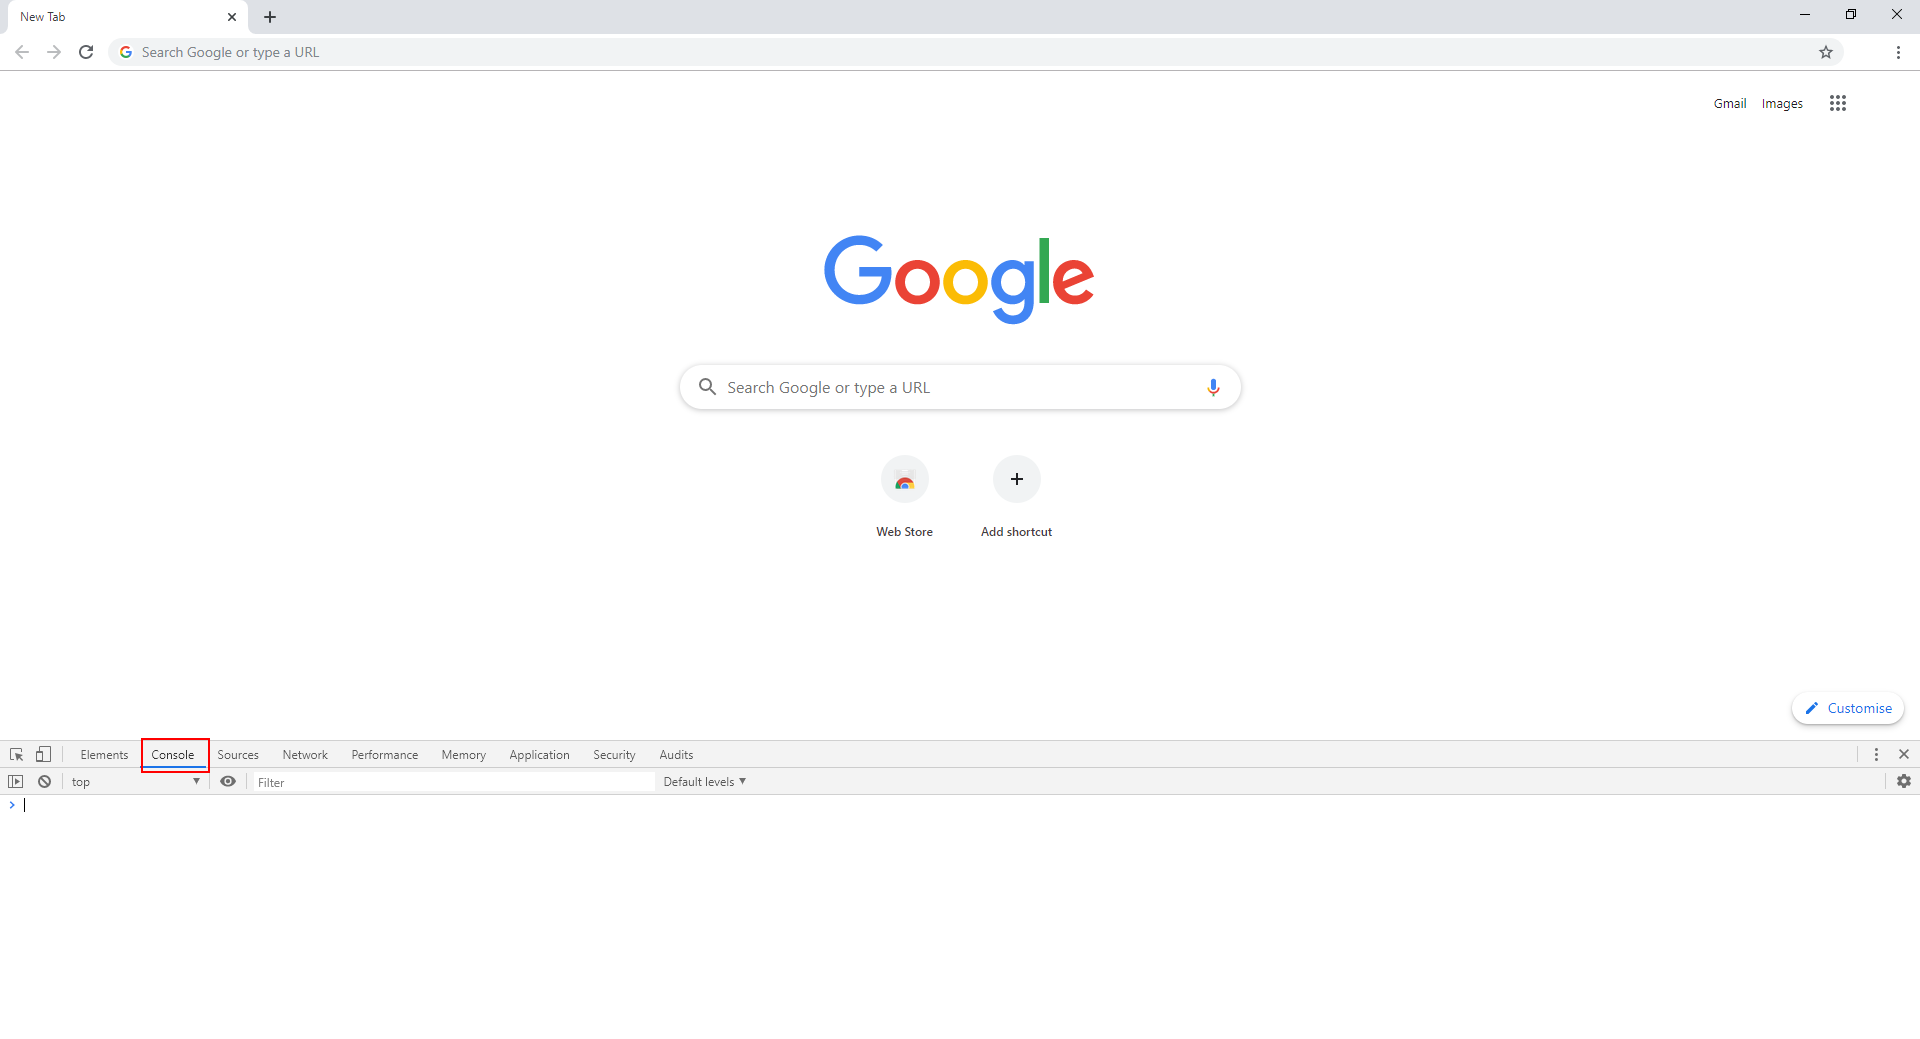 open google chrome browser